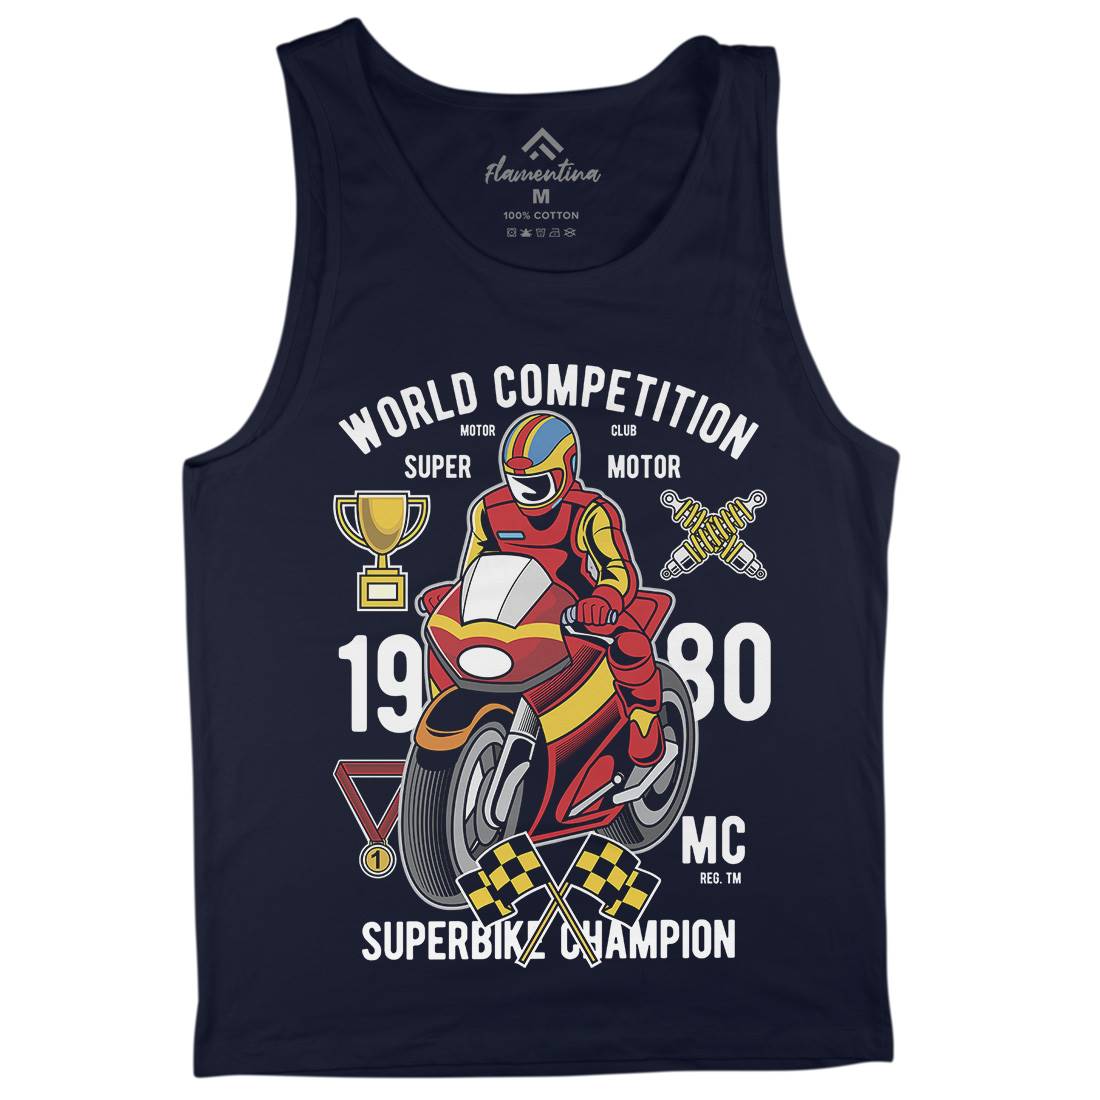 Super Bike World Competition Mens Tank Top Vest Motorcycles C458